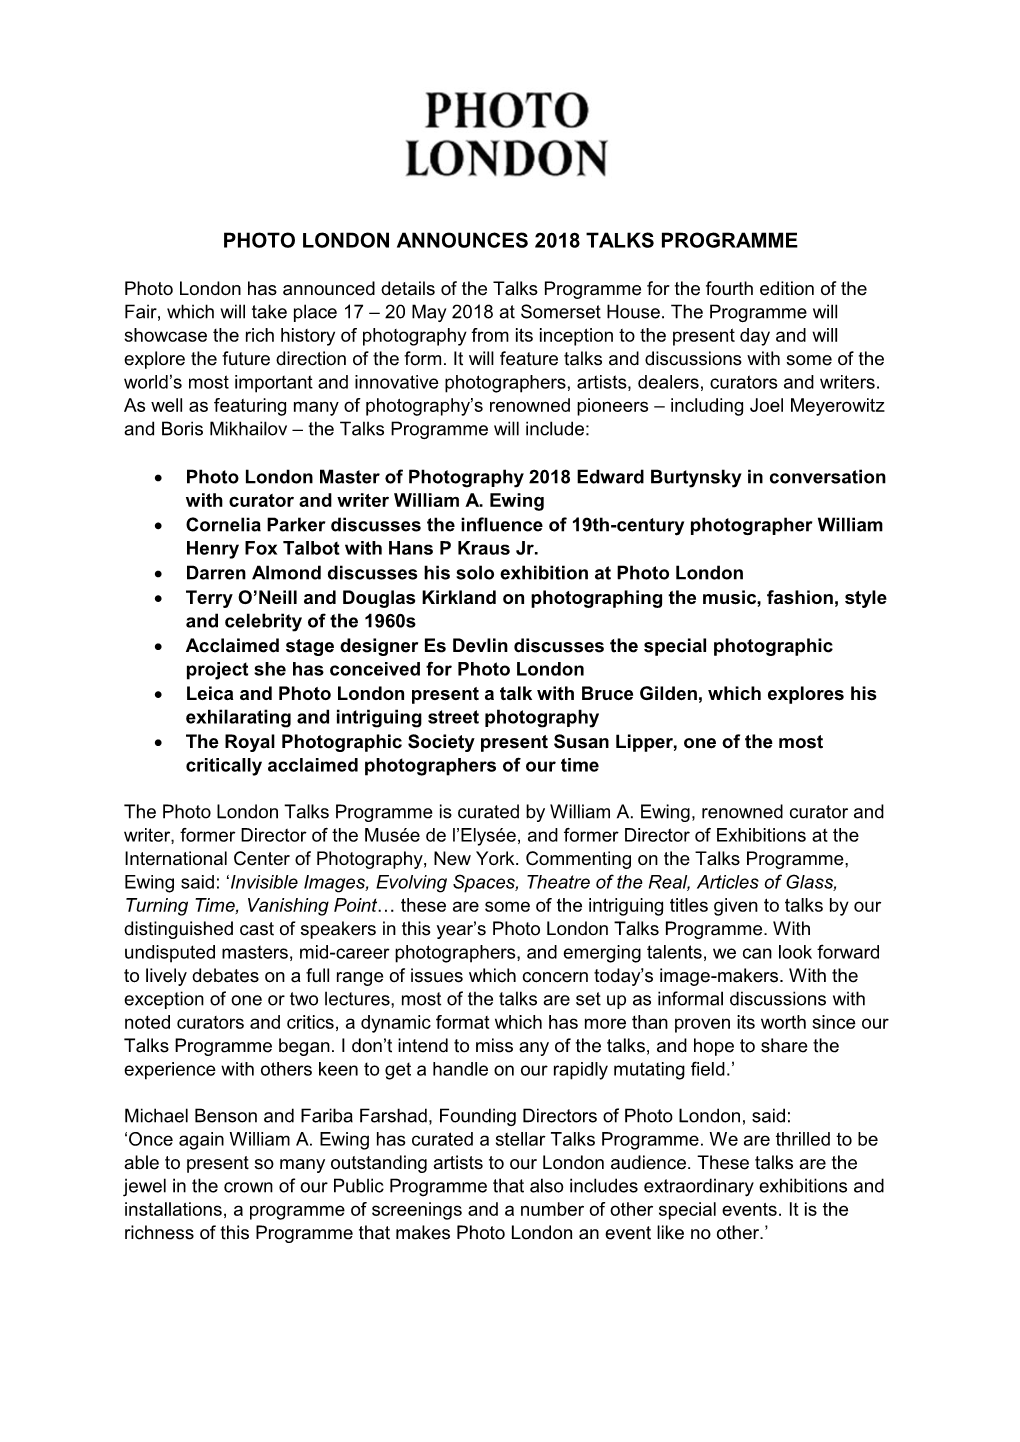 Photo London Announces 2018 Talks Programme